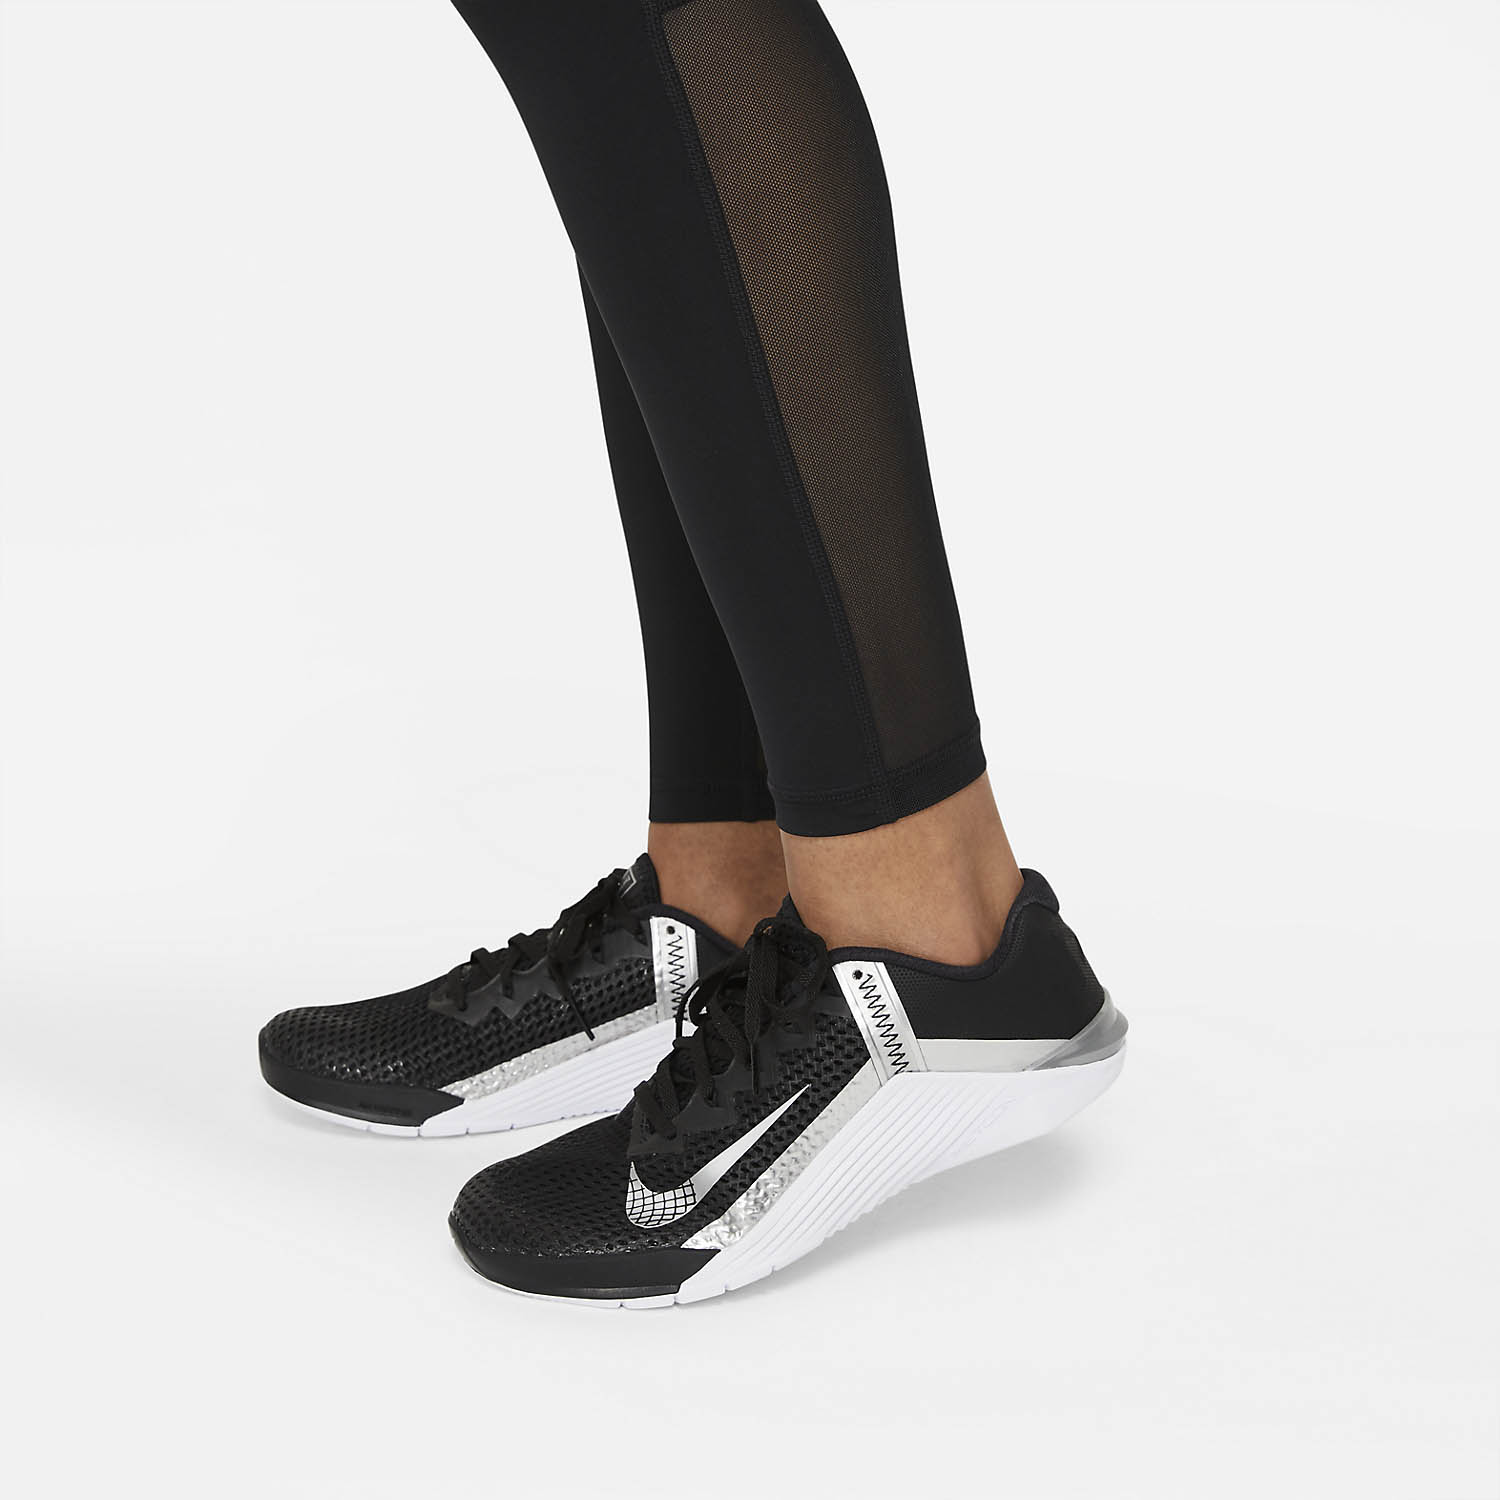 Nike Pro 365 Long Tights - Black/White